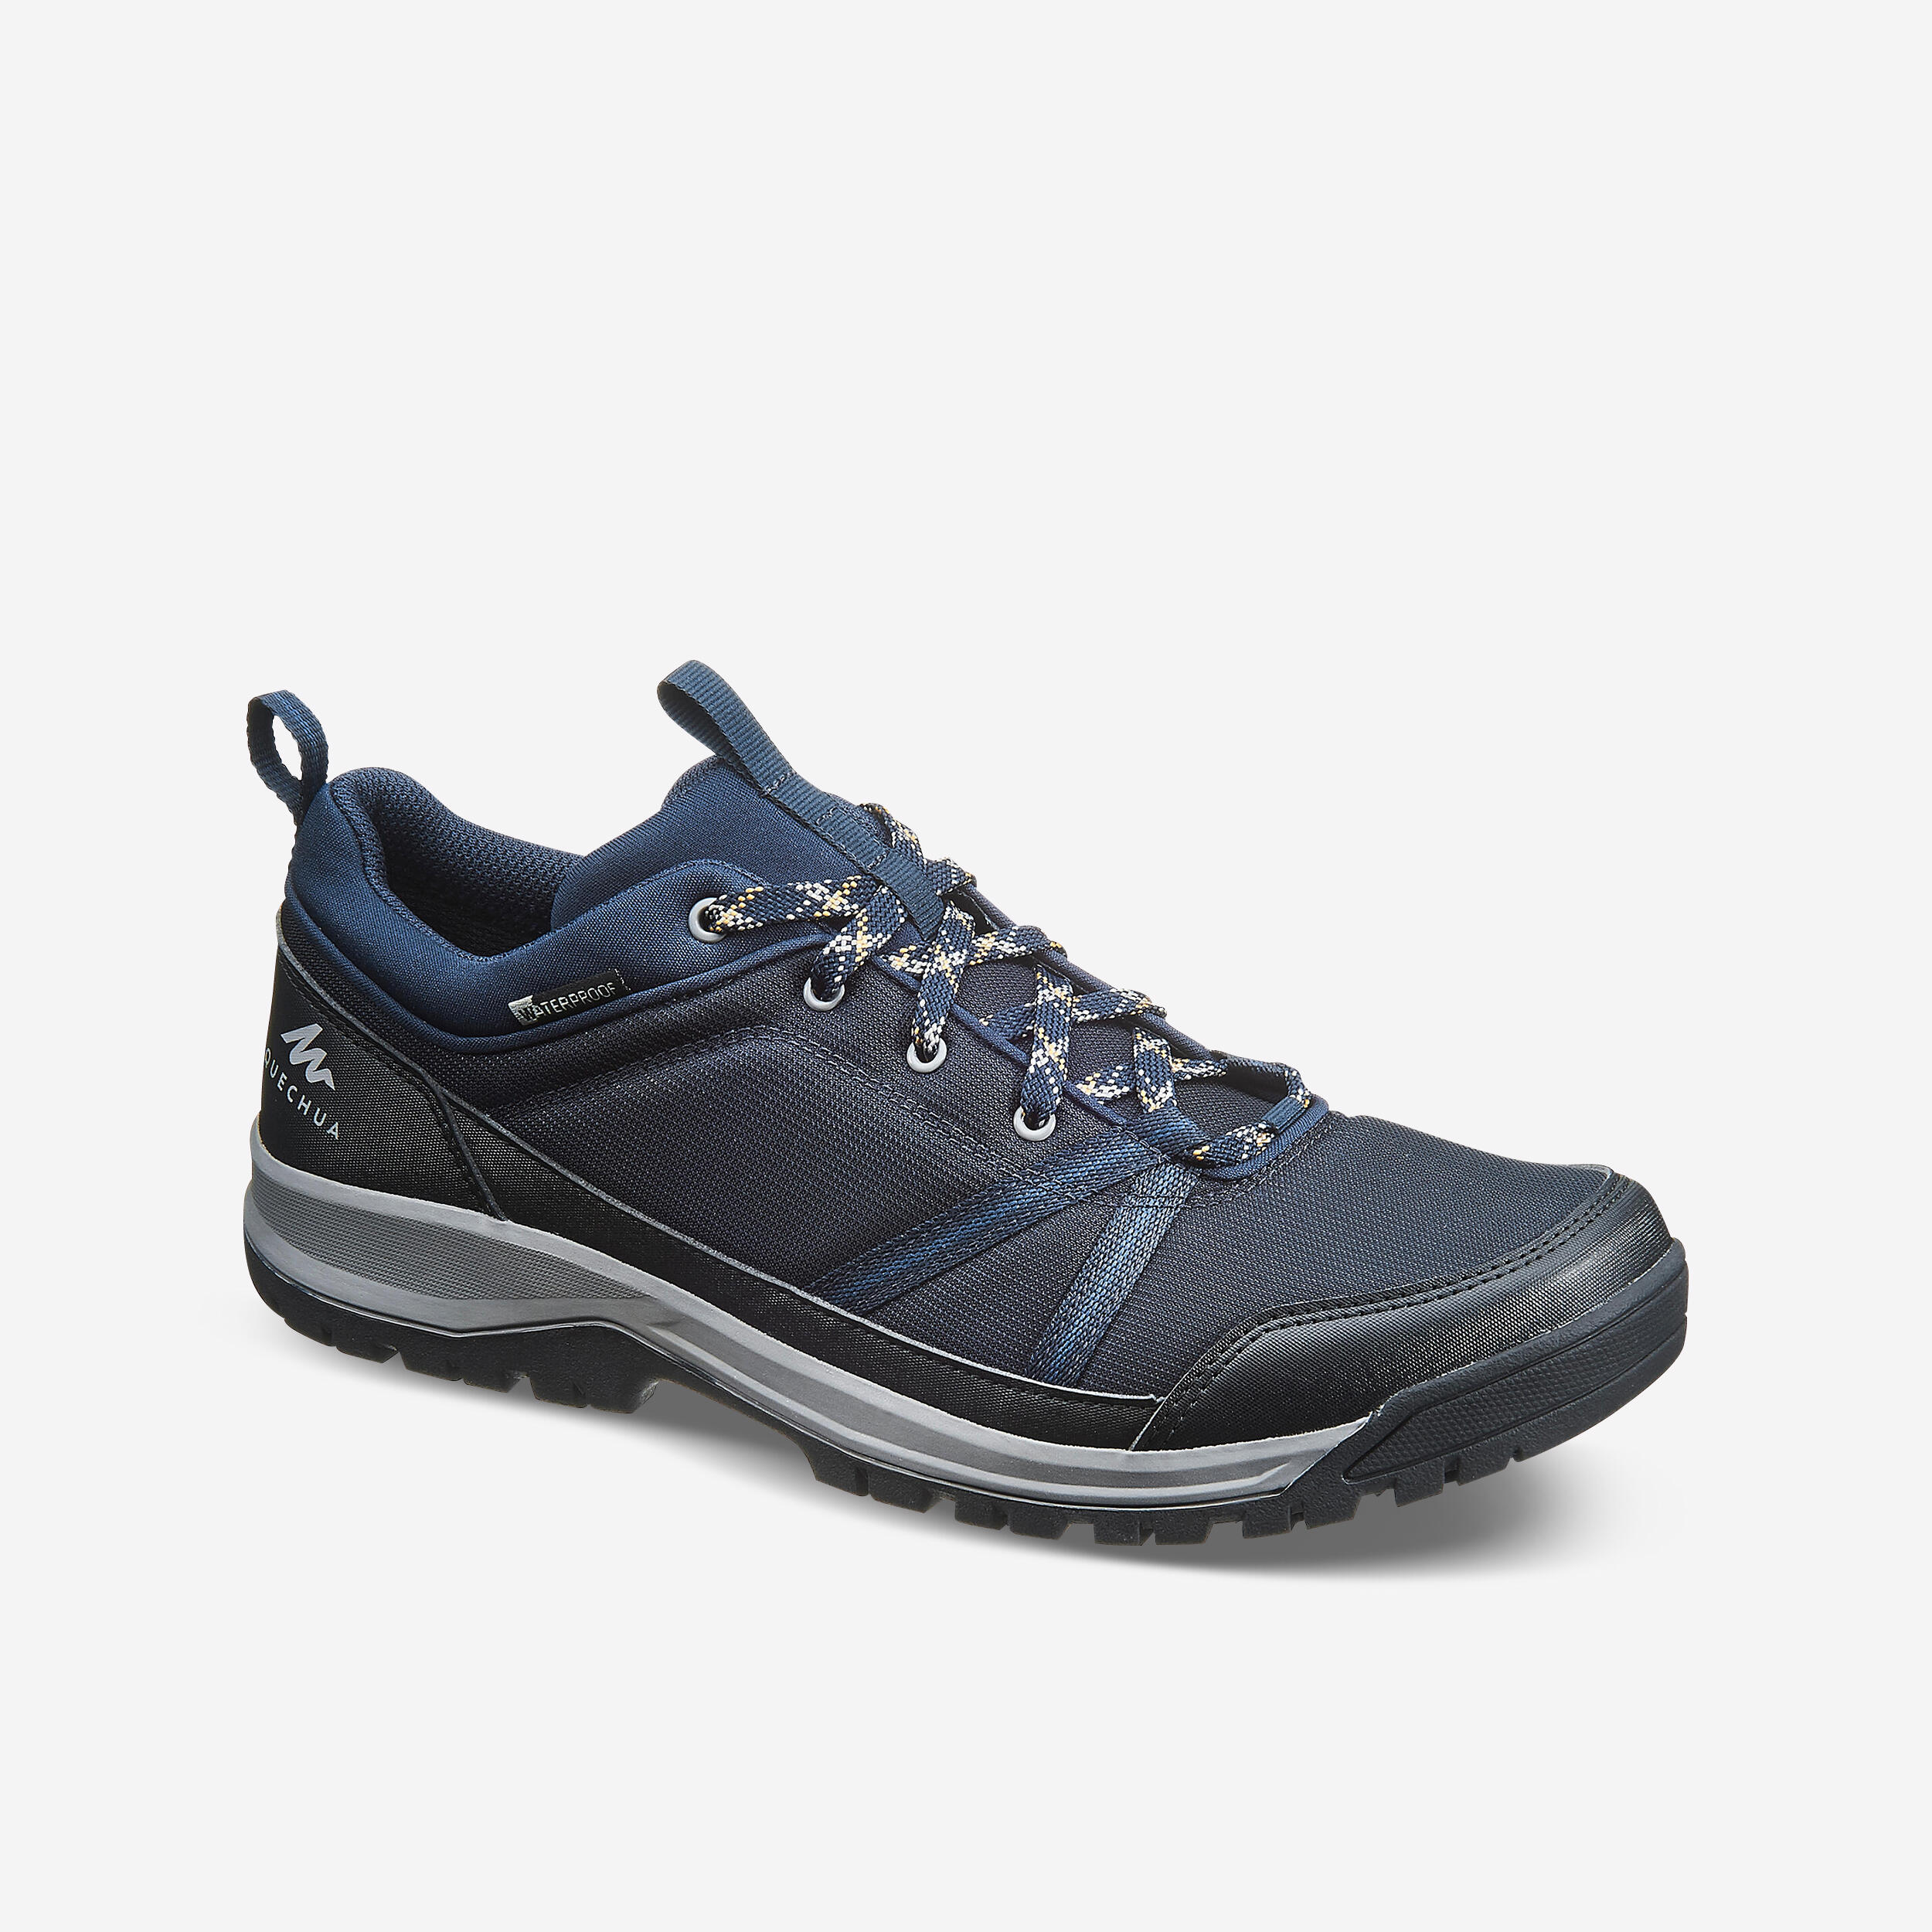 Men's Running Shoes - Run Active Blue - Dark blue - Kalenji - Decathlon